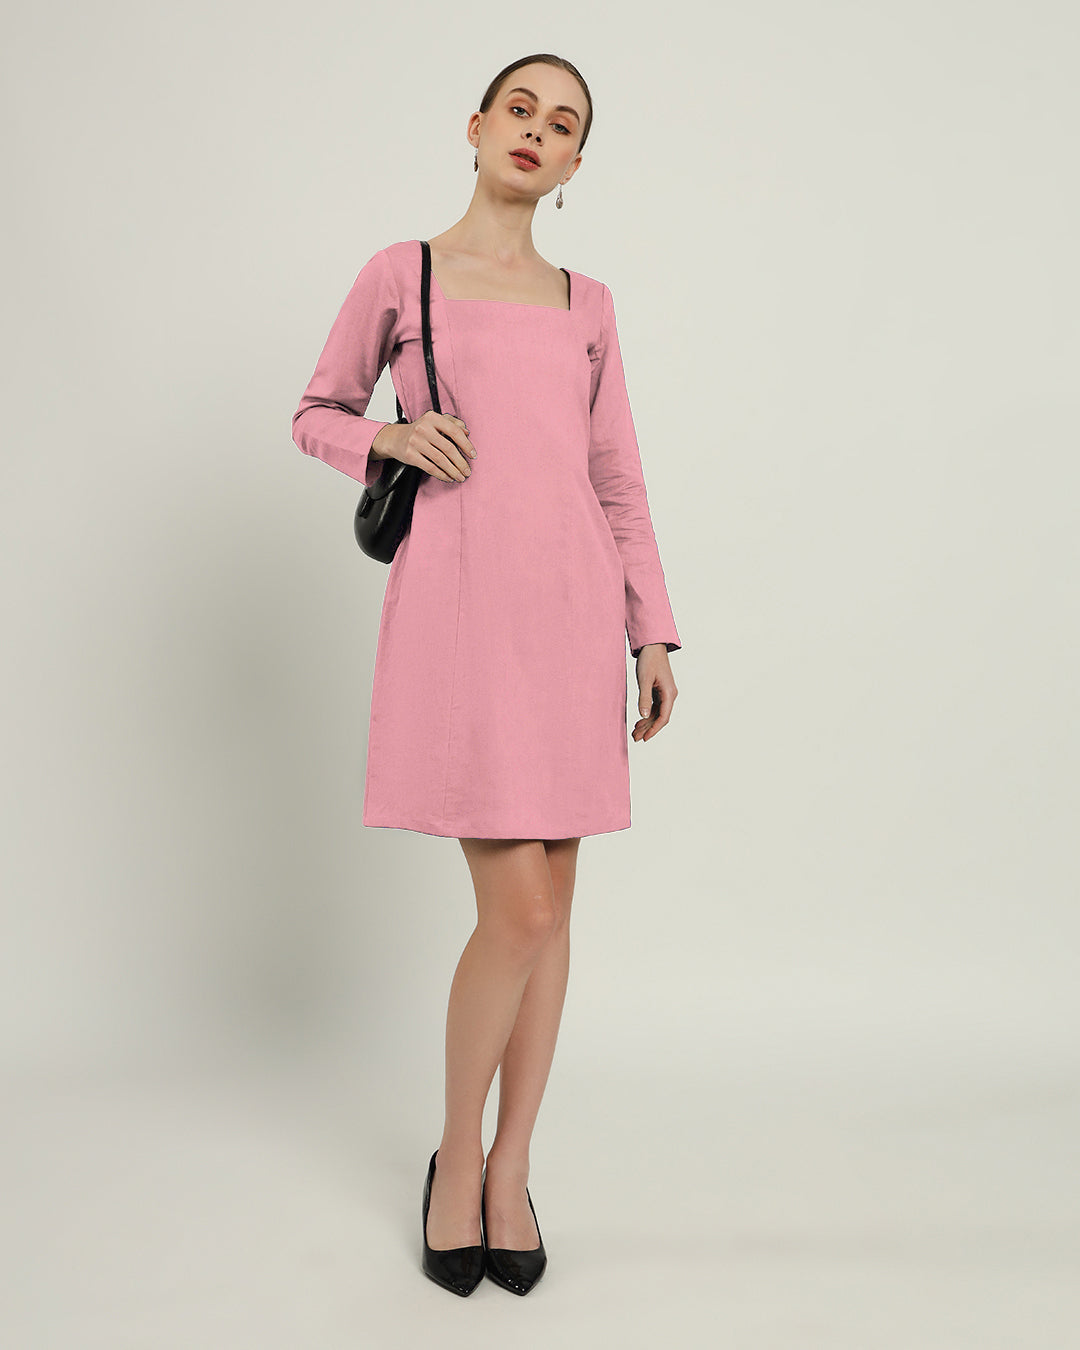 The Auburn Fondant Pink Dress